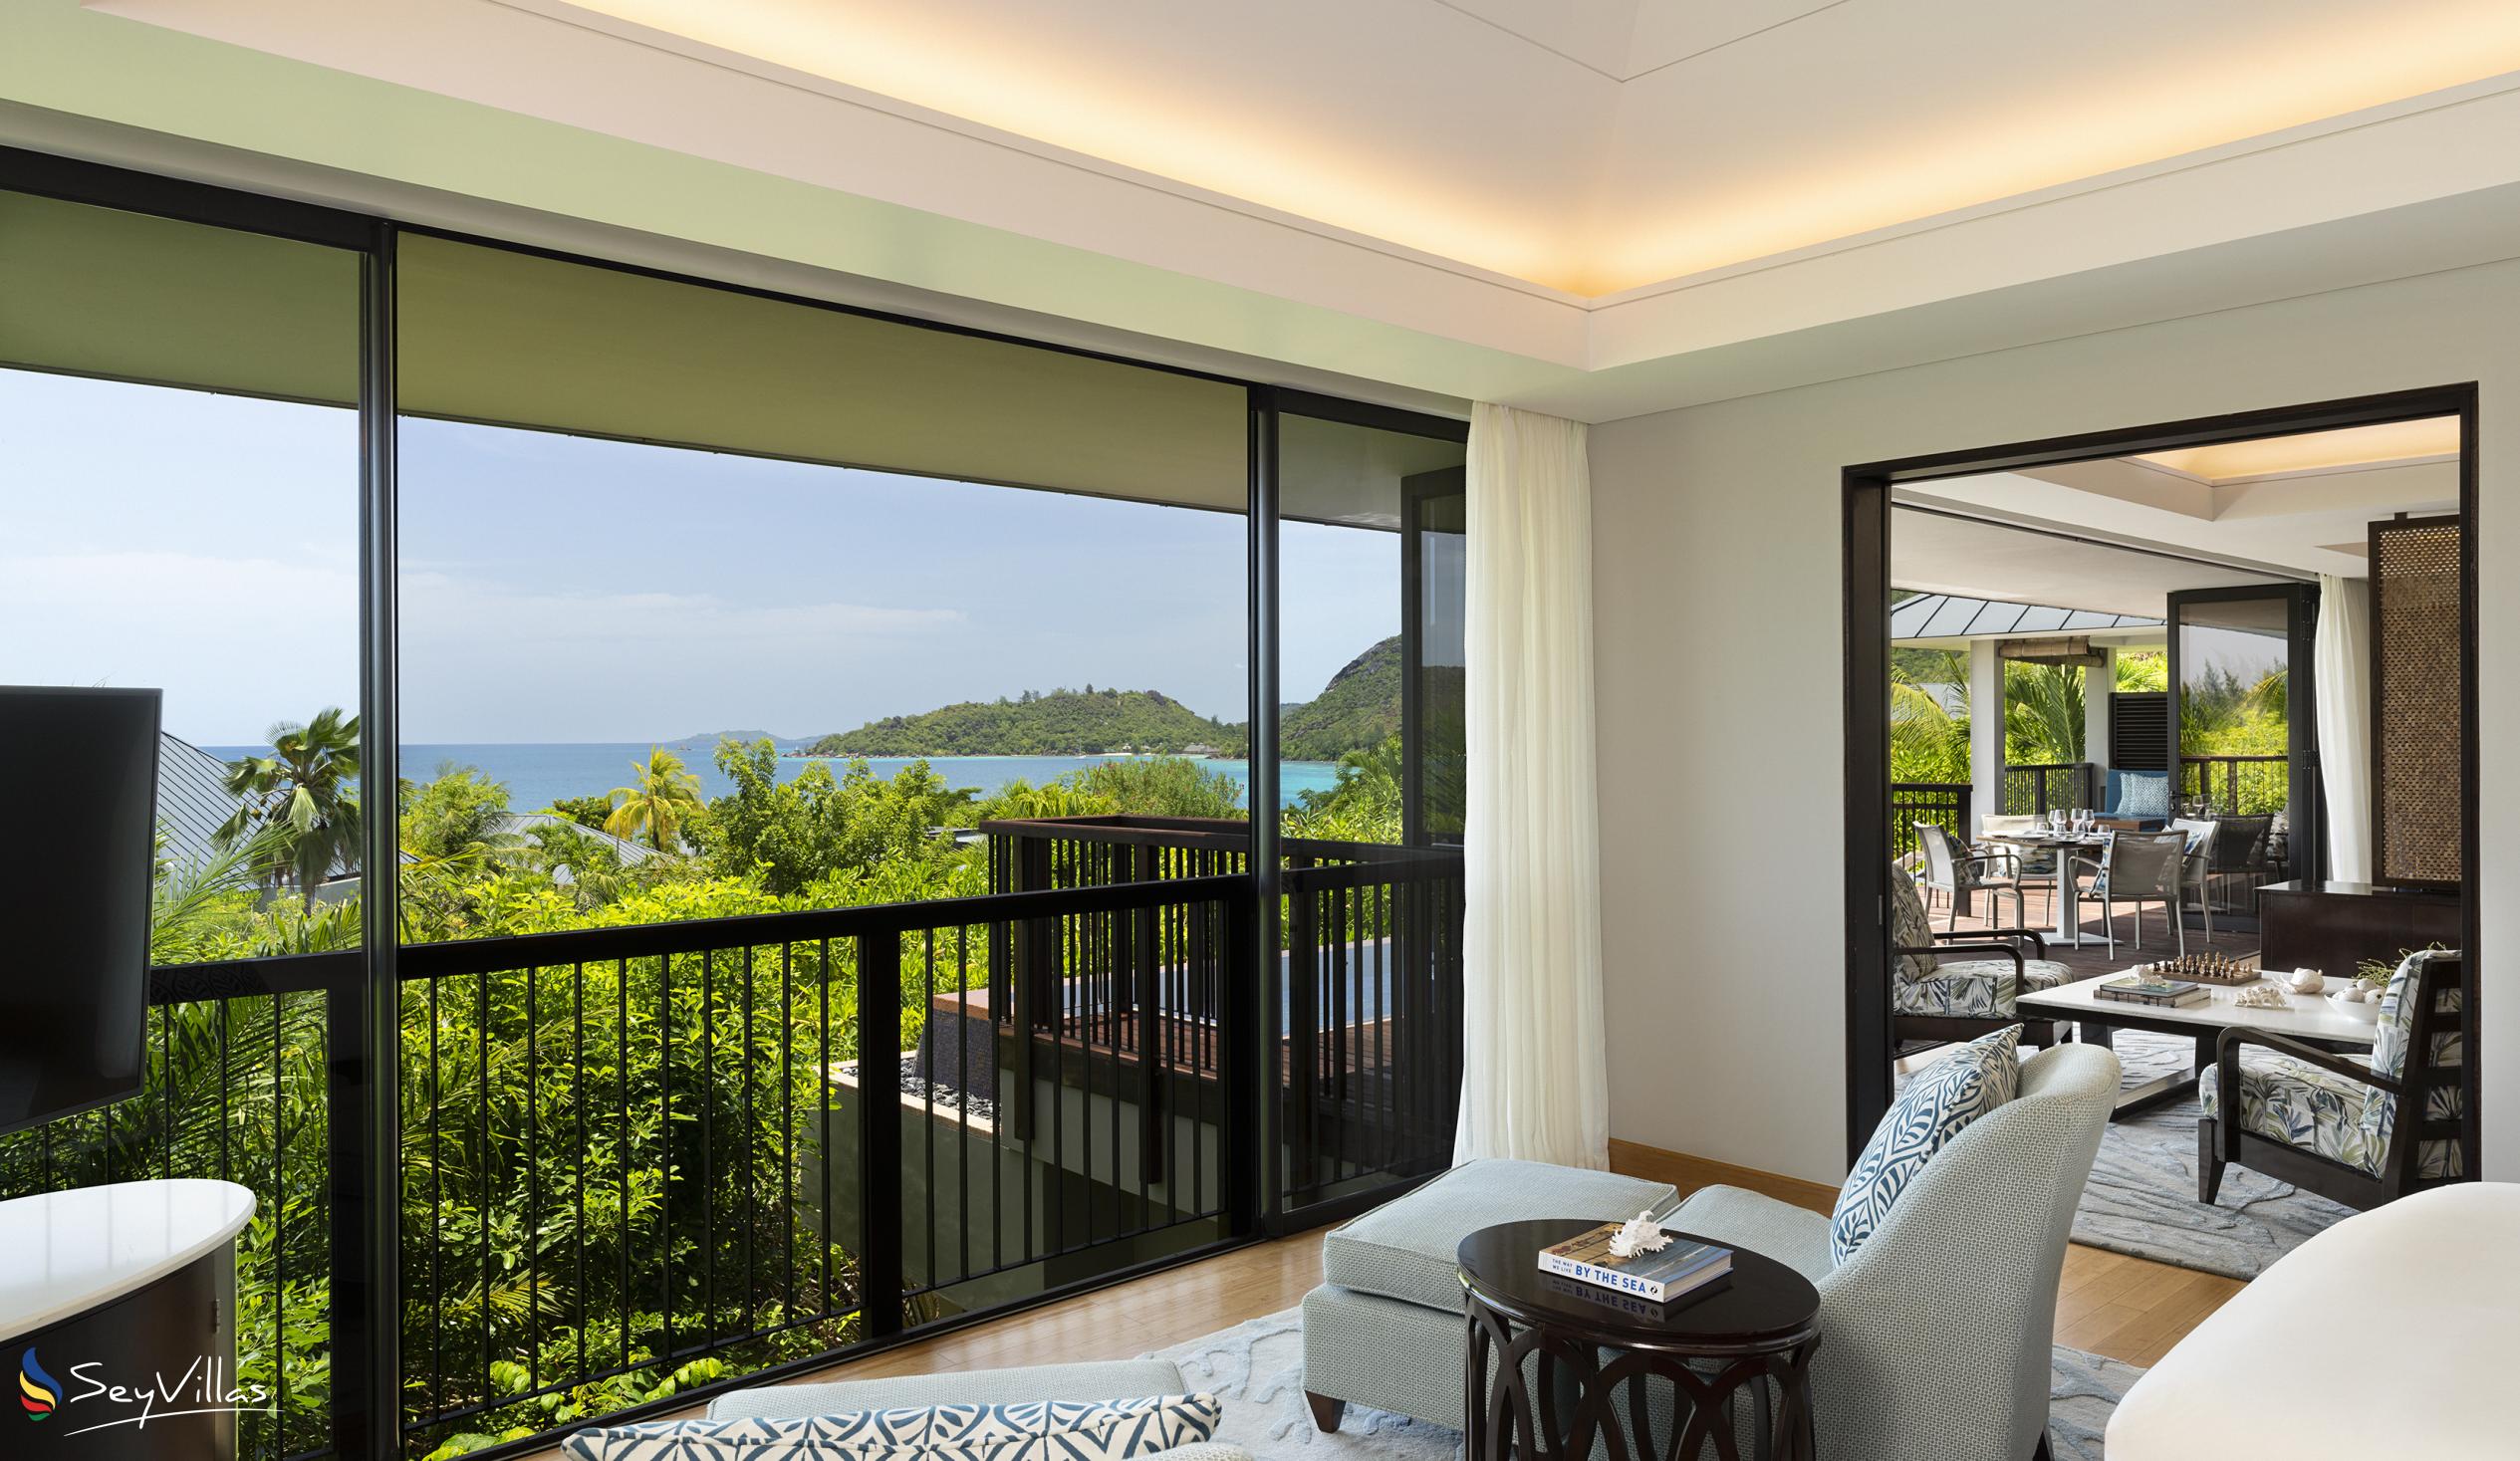 Photo 62: Raffles - 2-Bedroom Ocean View Pool Villas - Praslin (Seychelles)